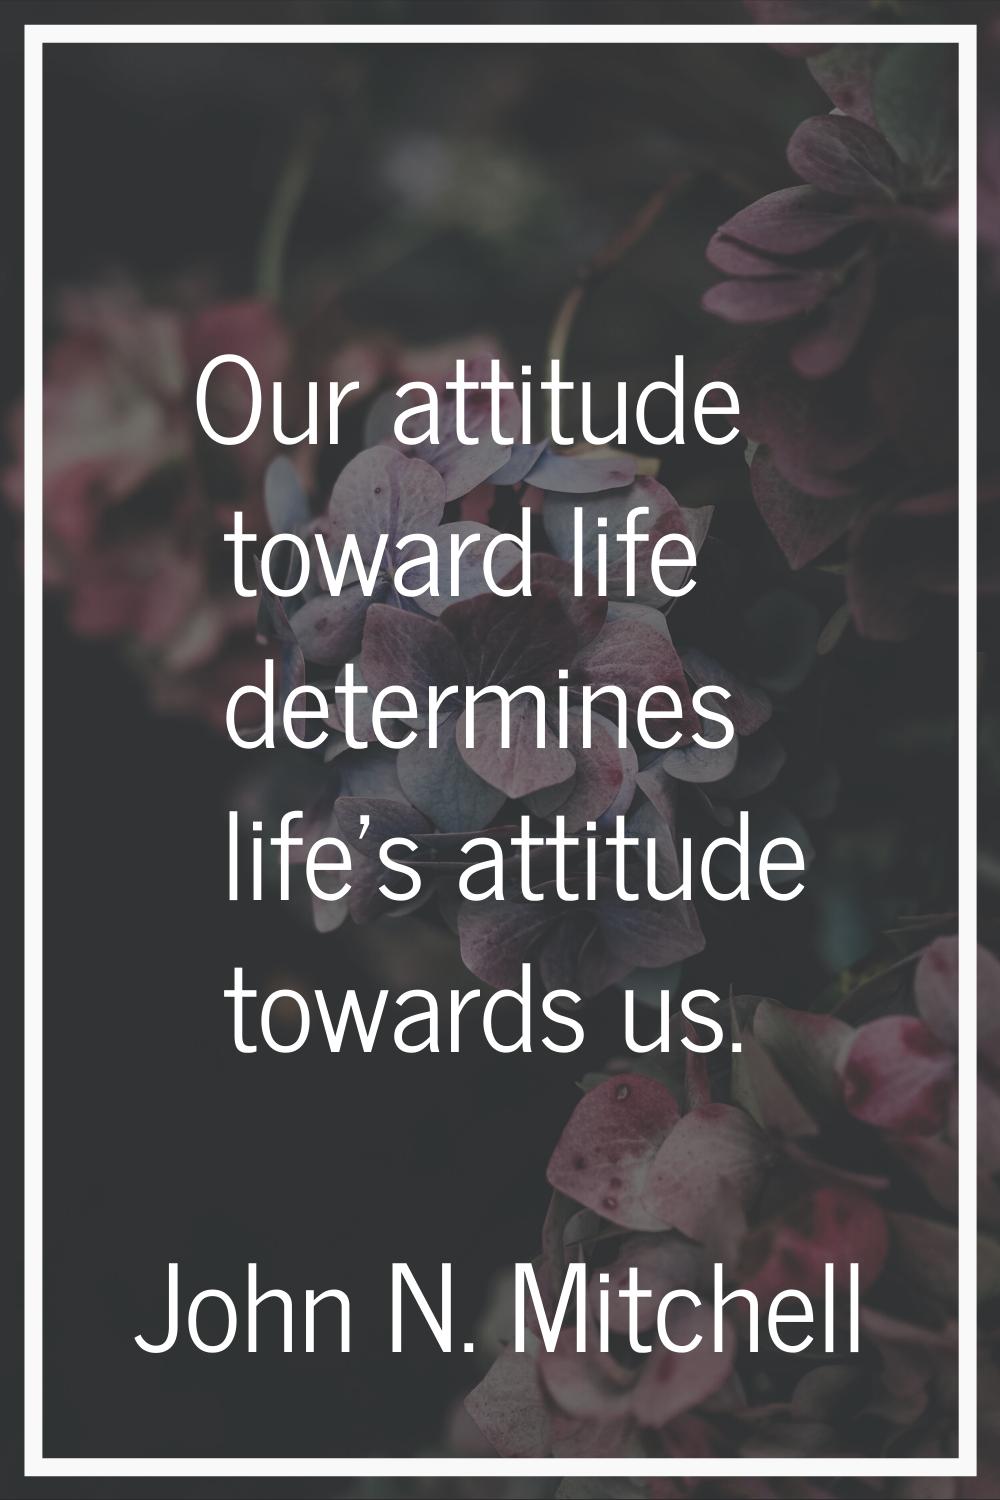 Our attitude toward life determines life's attitude towards us.